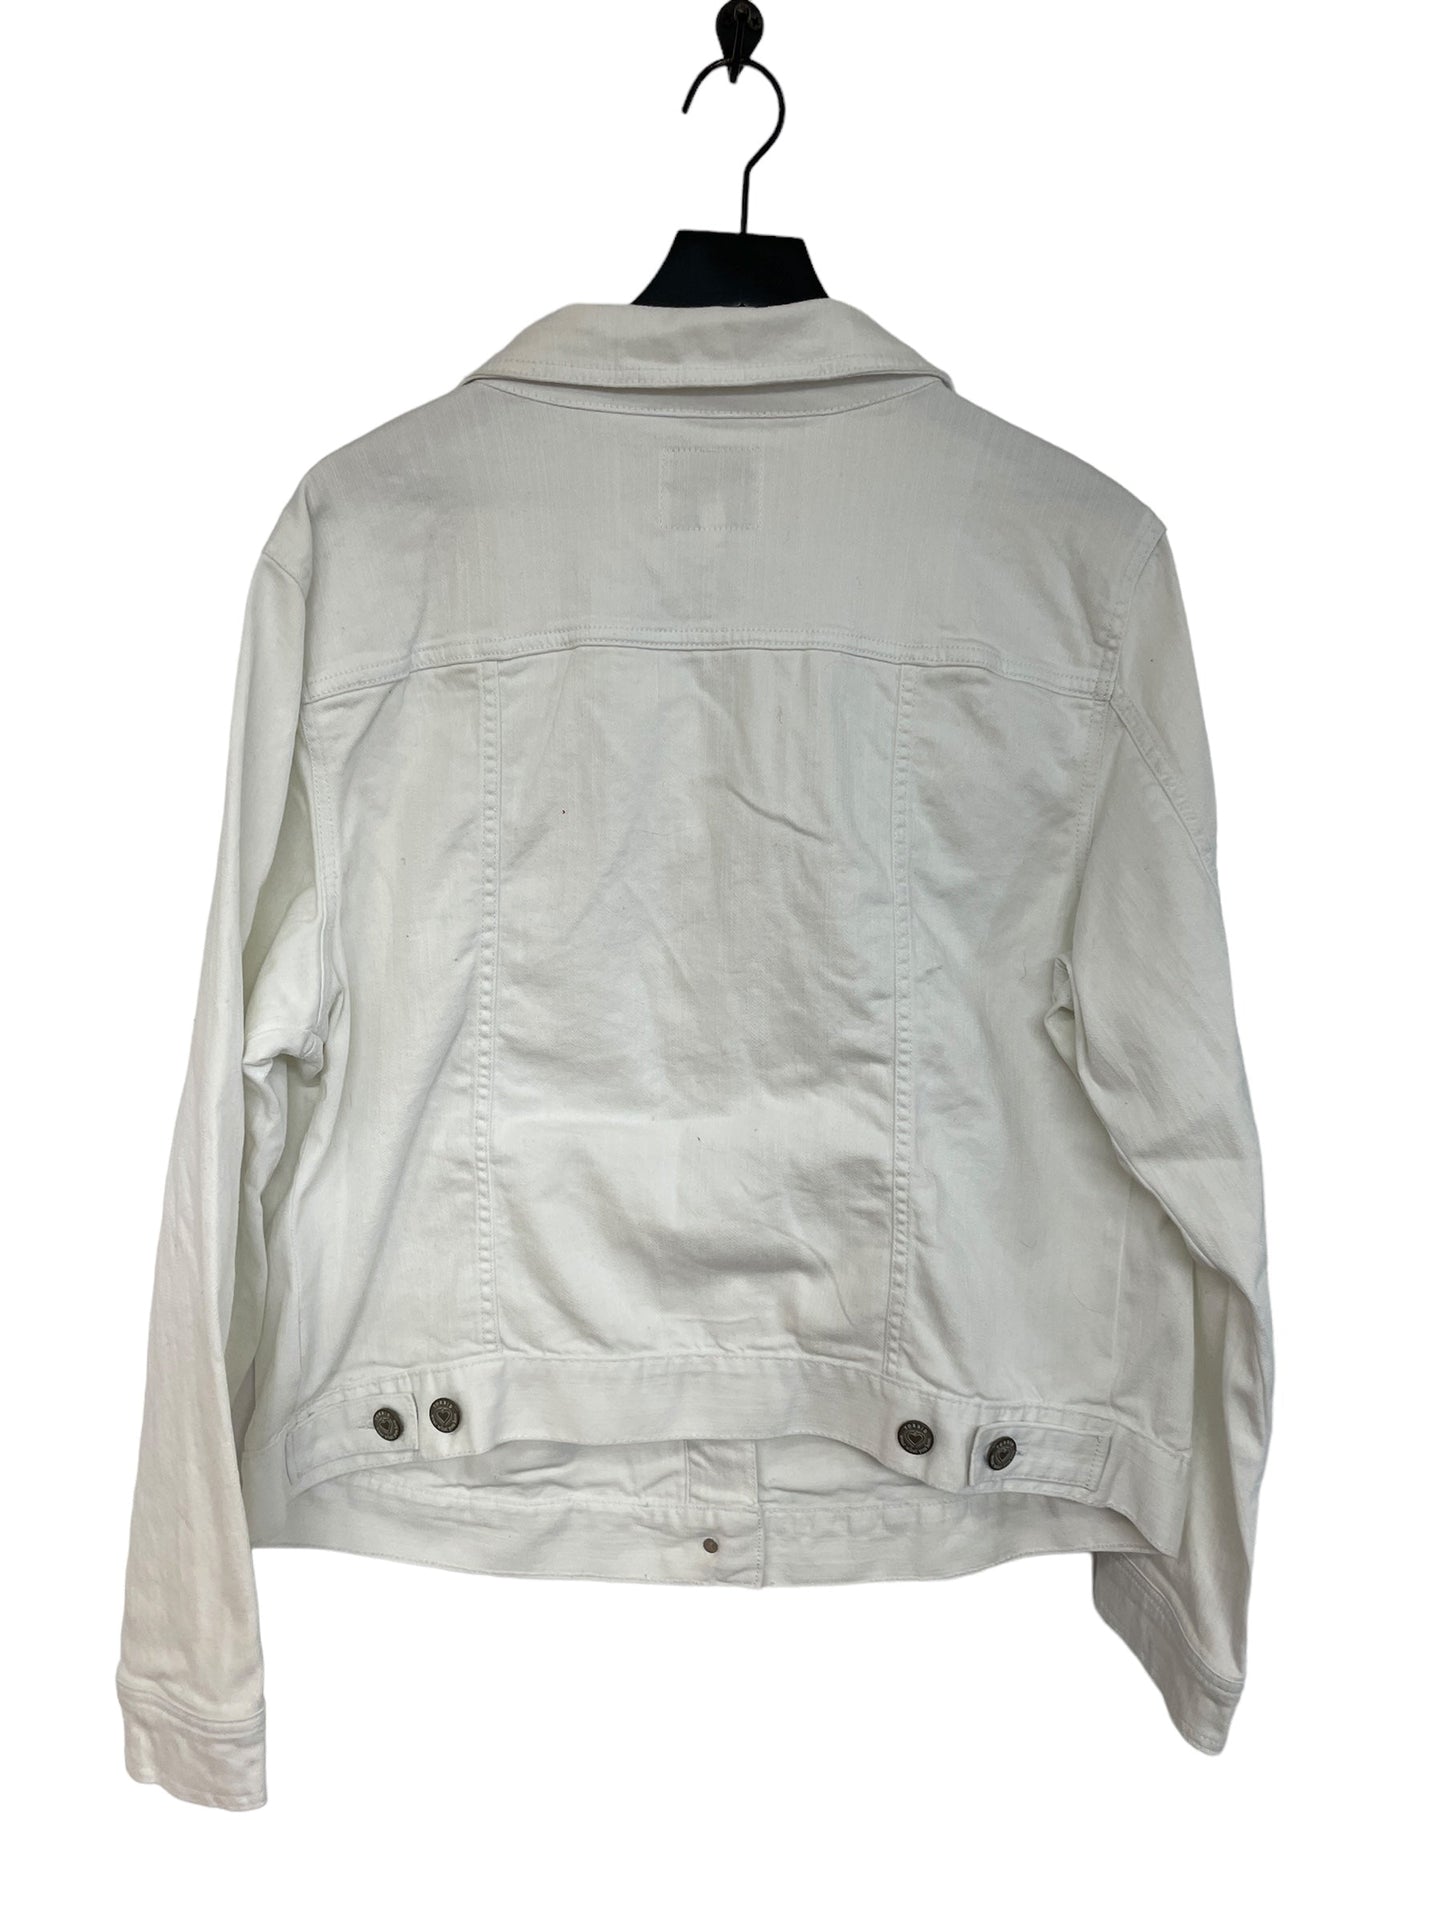 Jacket Denim By Torrid  Size: 2x